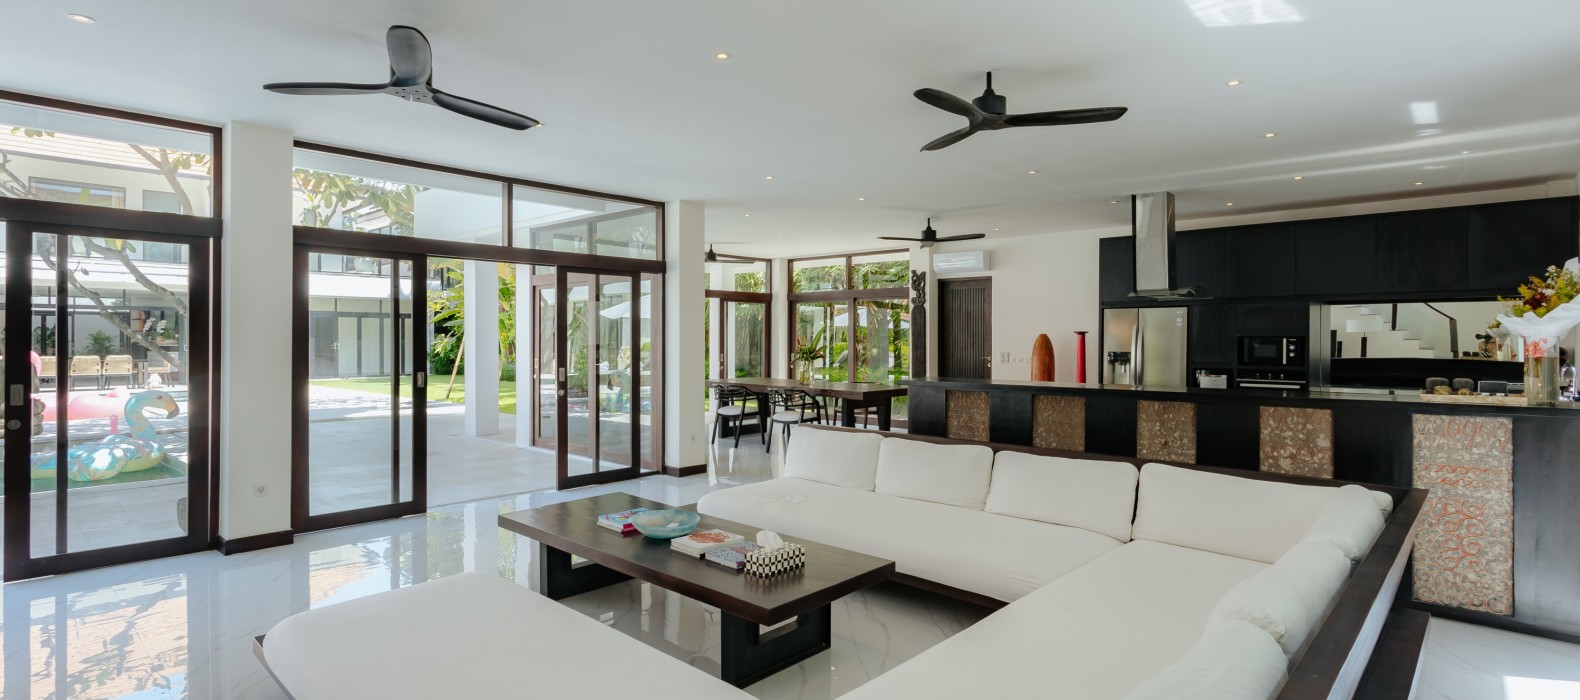 Living room of Villa Groven in Bali